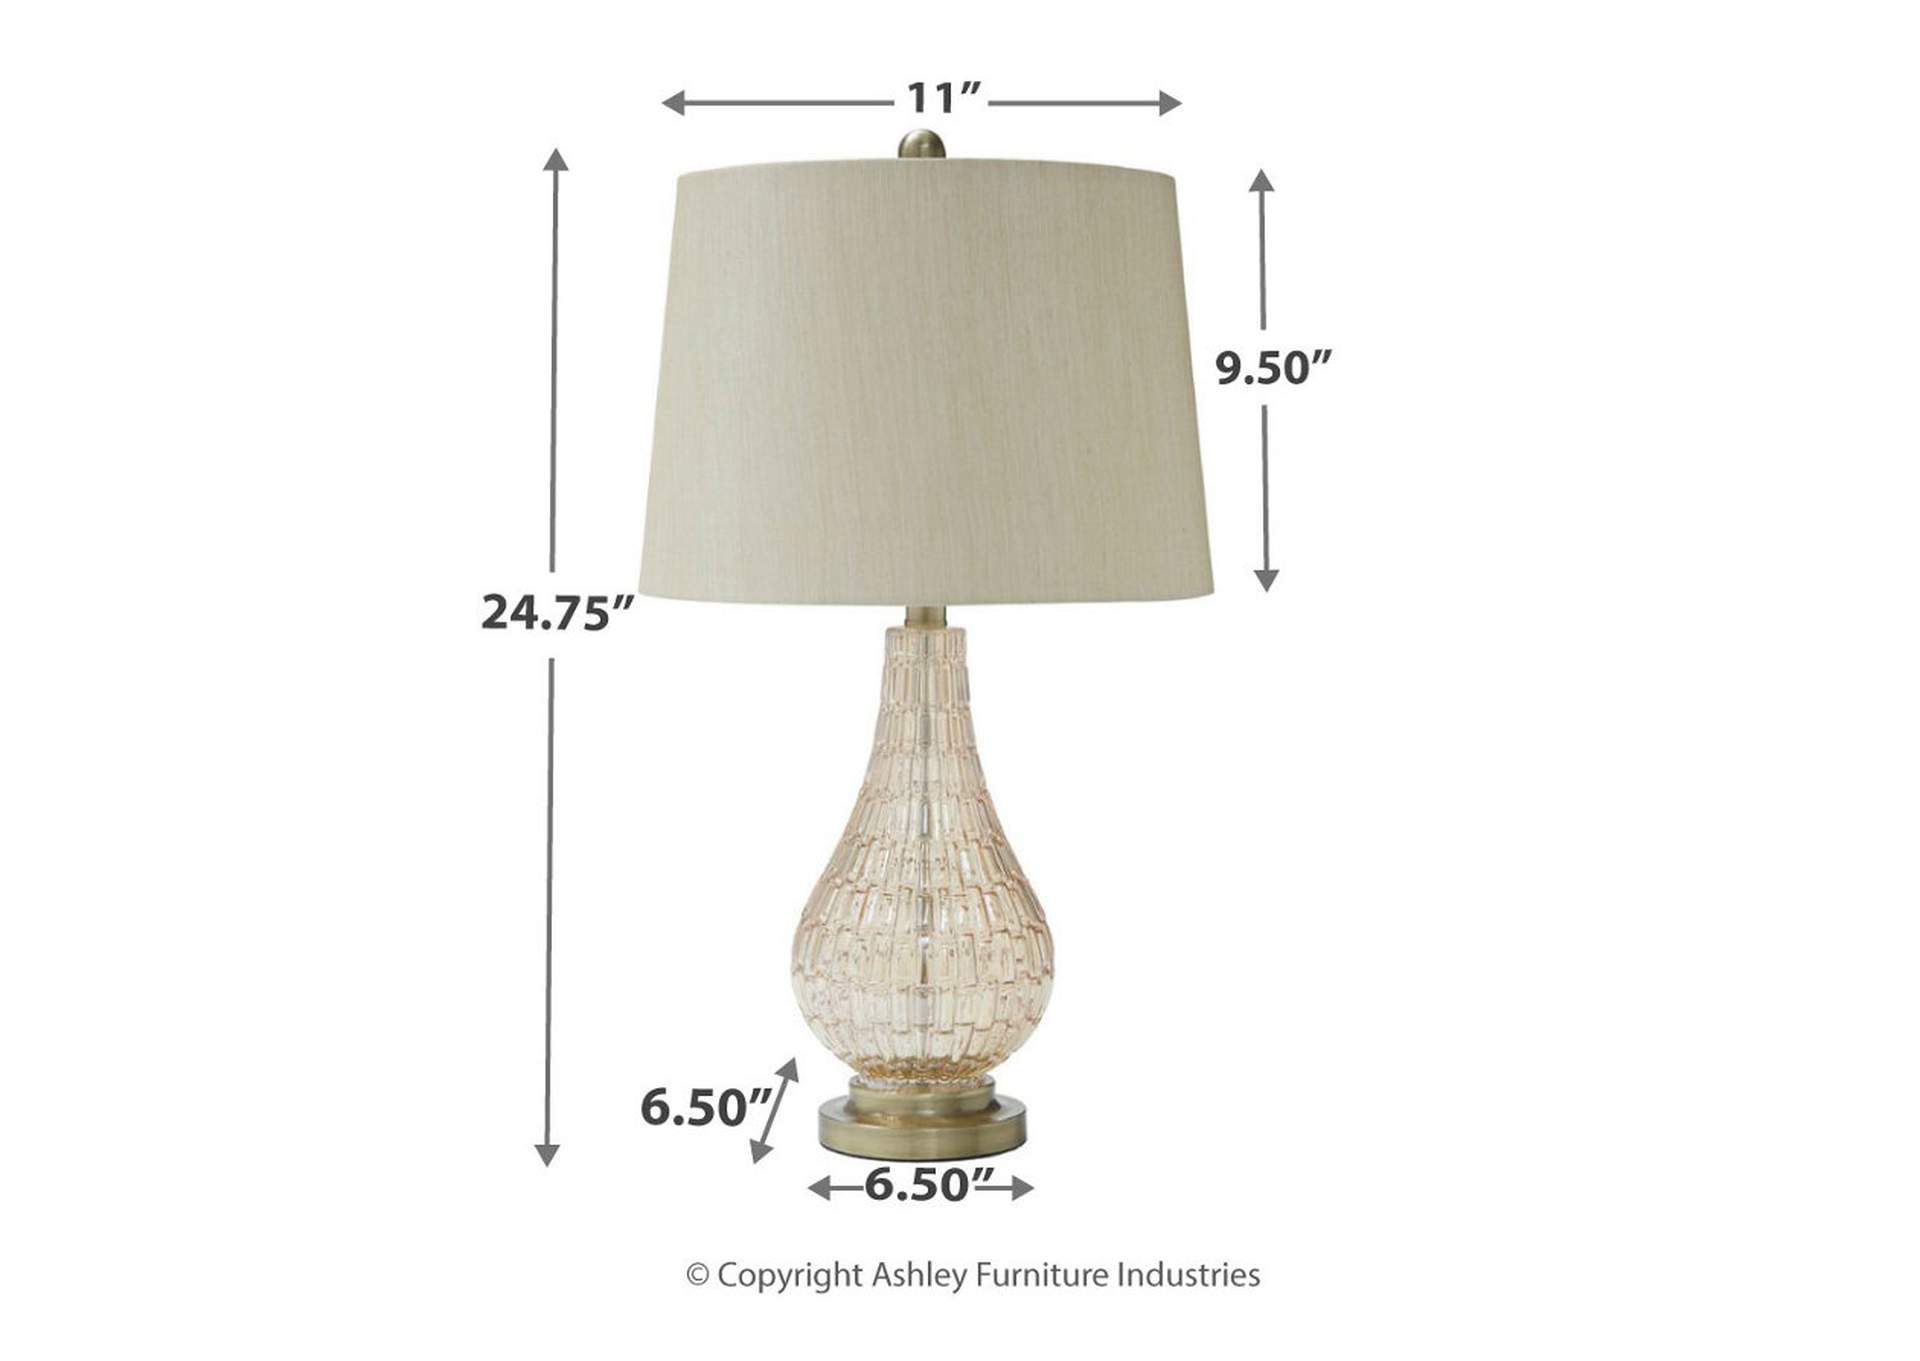 Latoya Table Lamp,Direct To Consumer Express